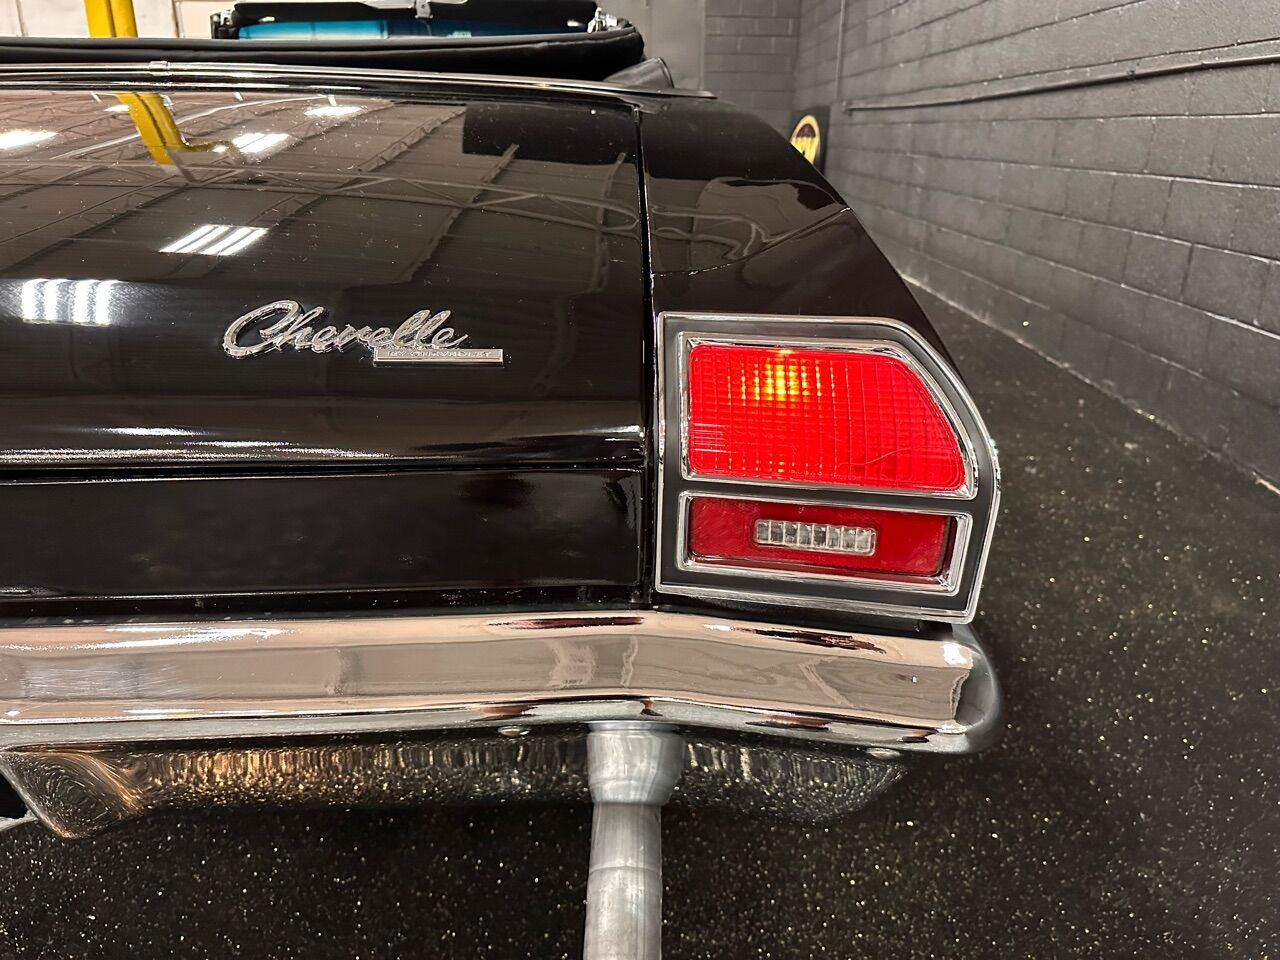 1969 Chevrolet Chevelle 78